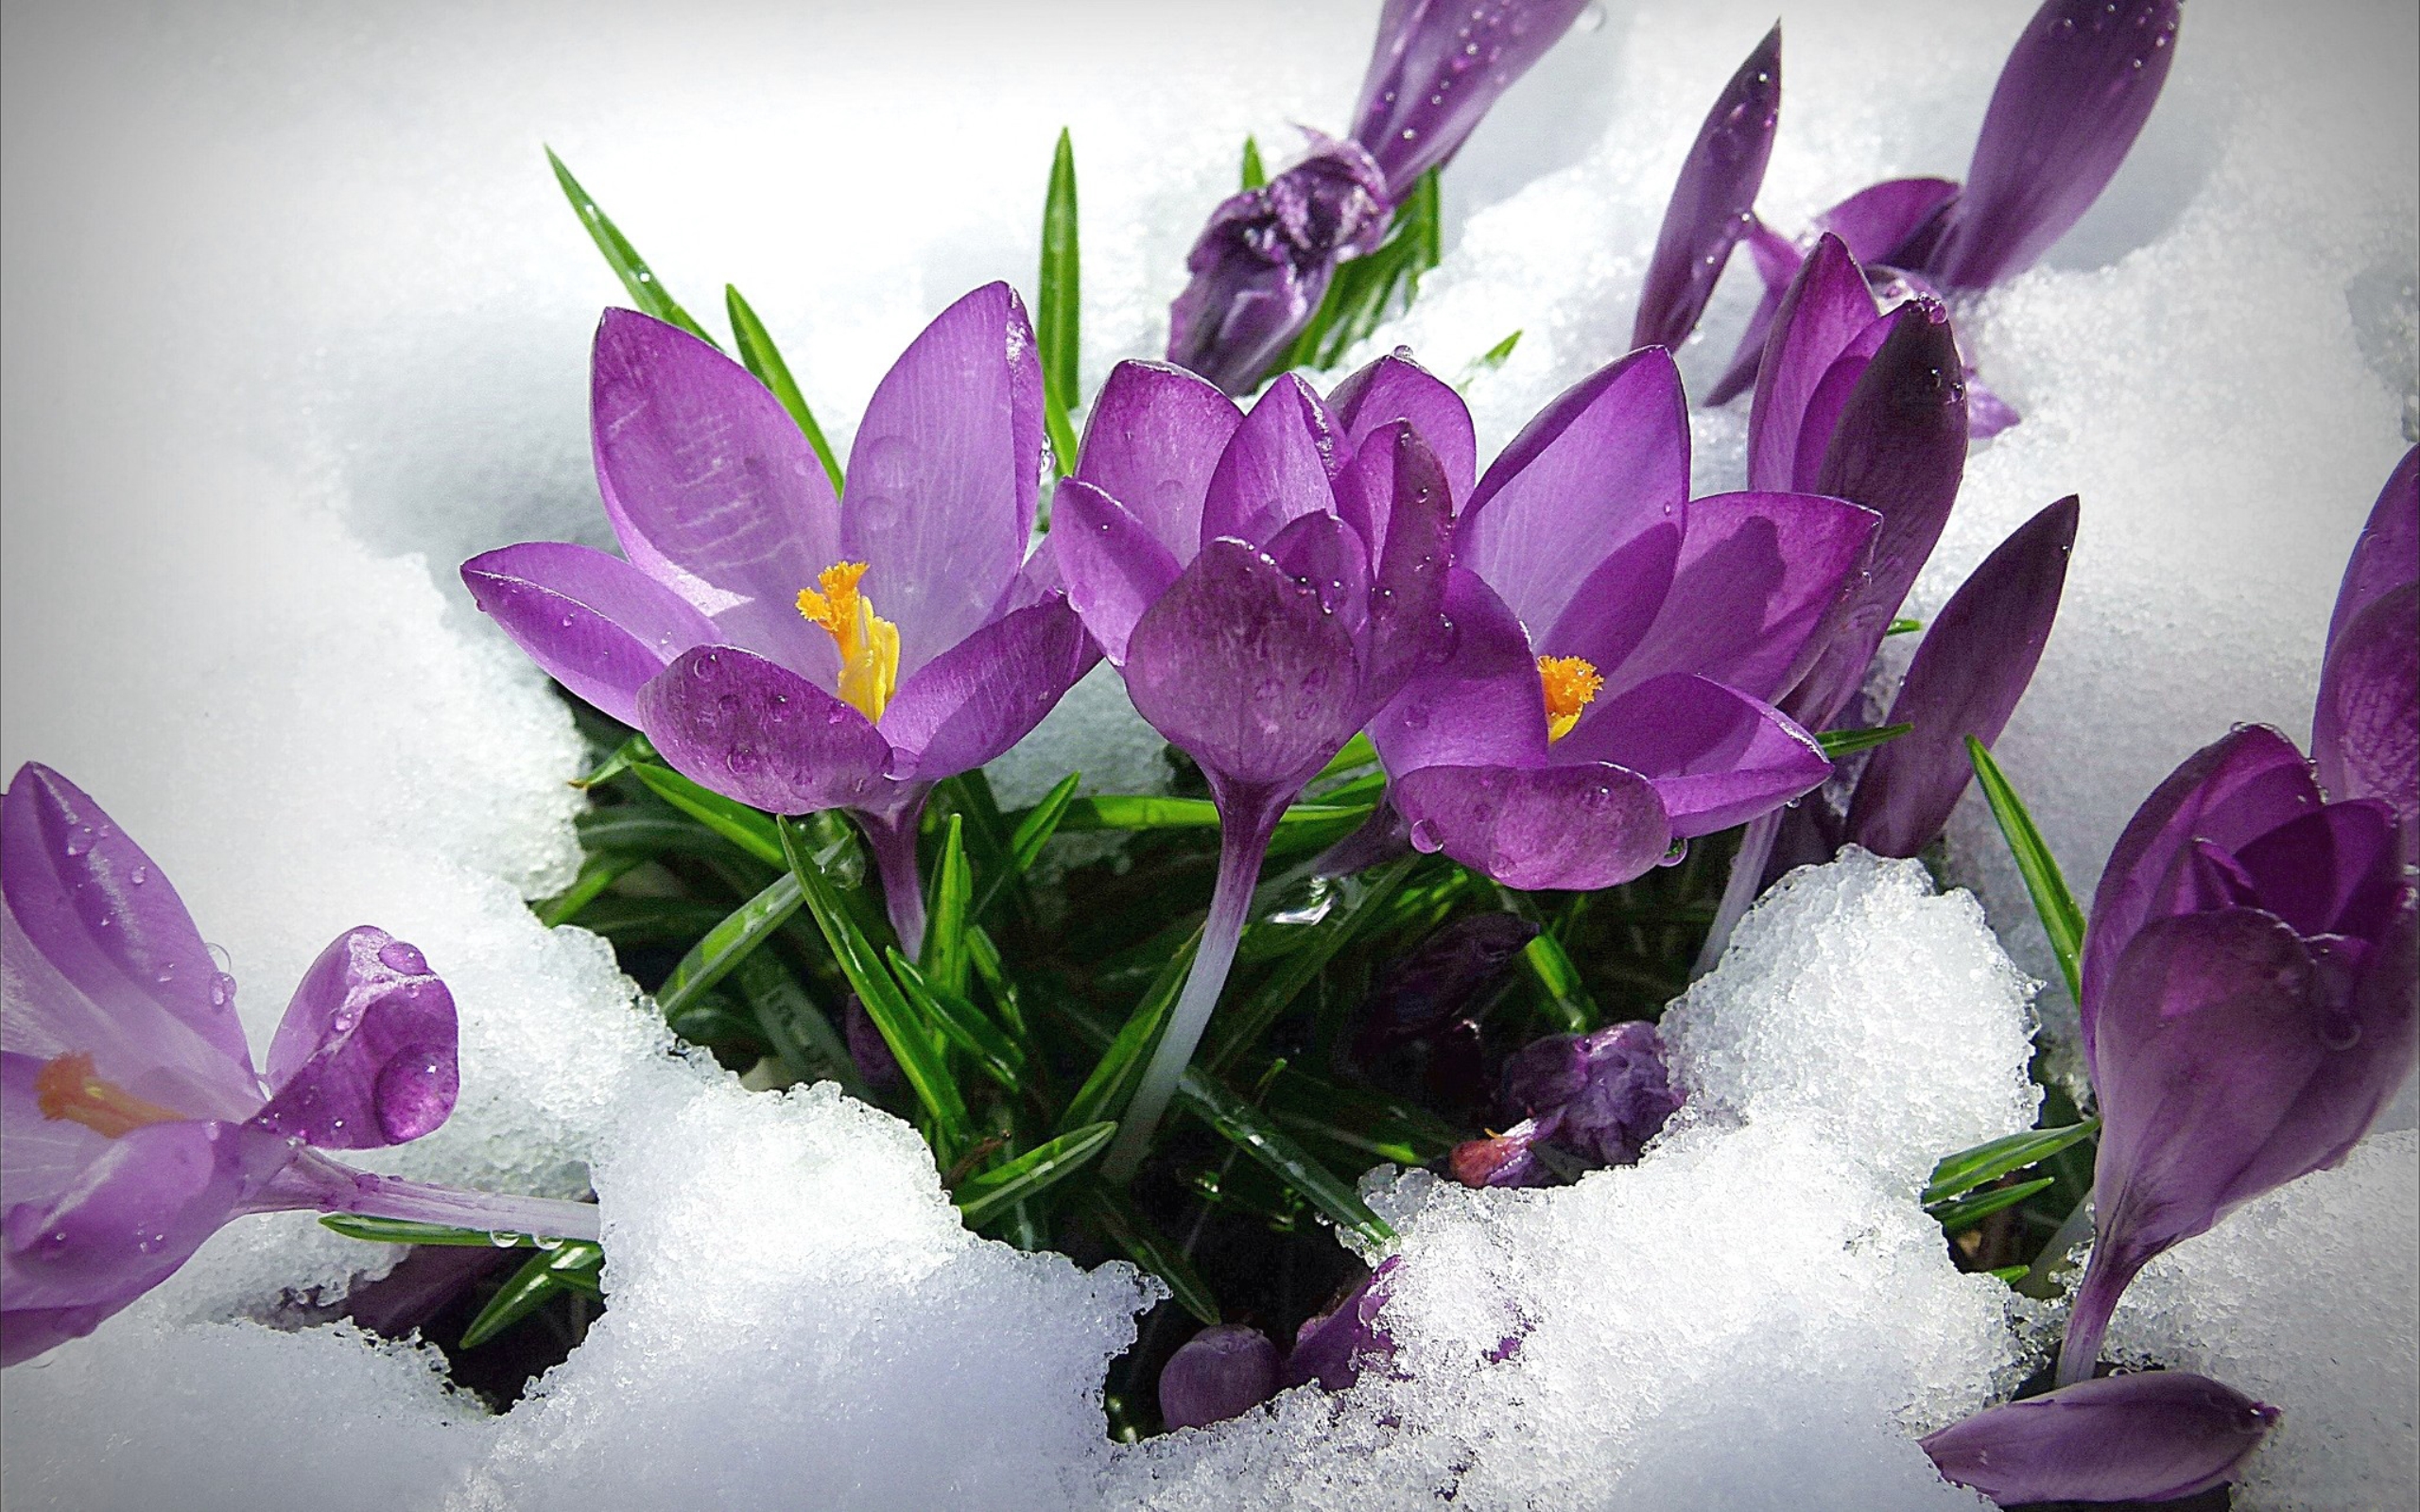 Purple spring flowers in the snow - HD wallpaper